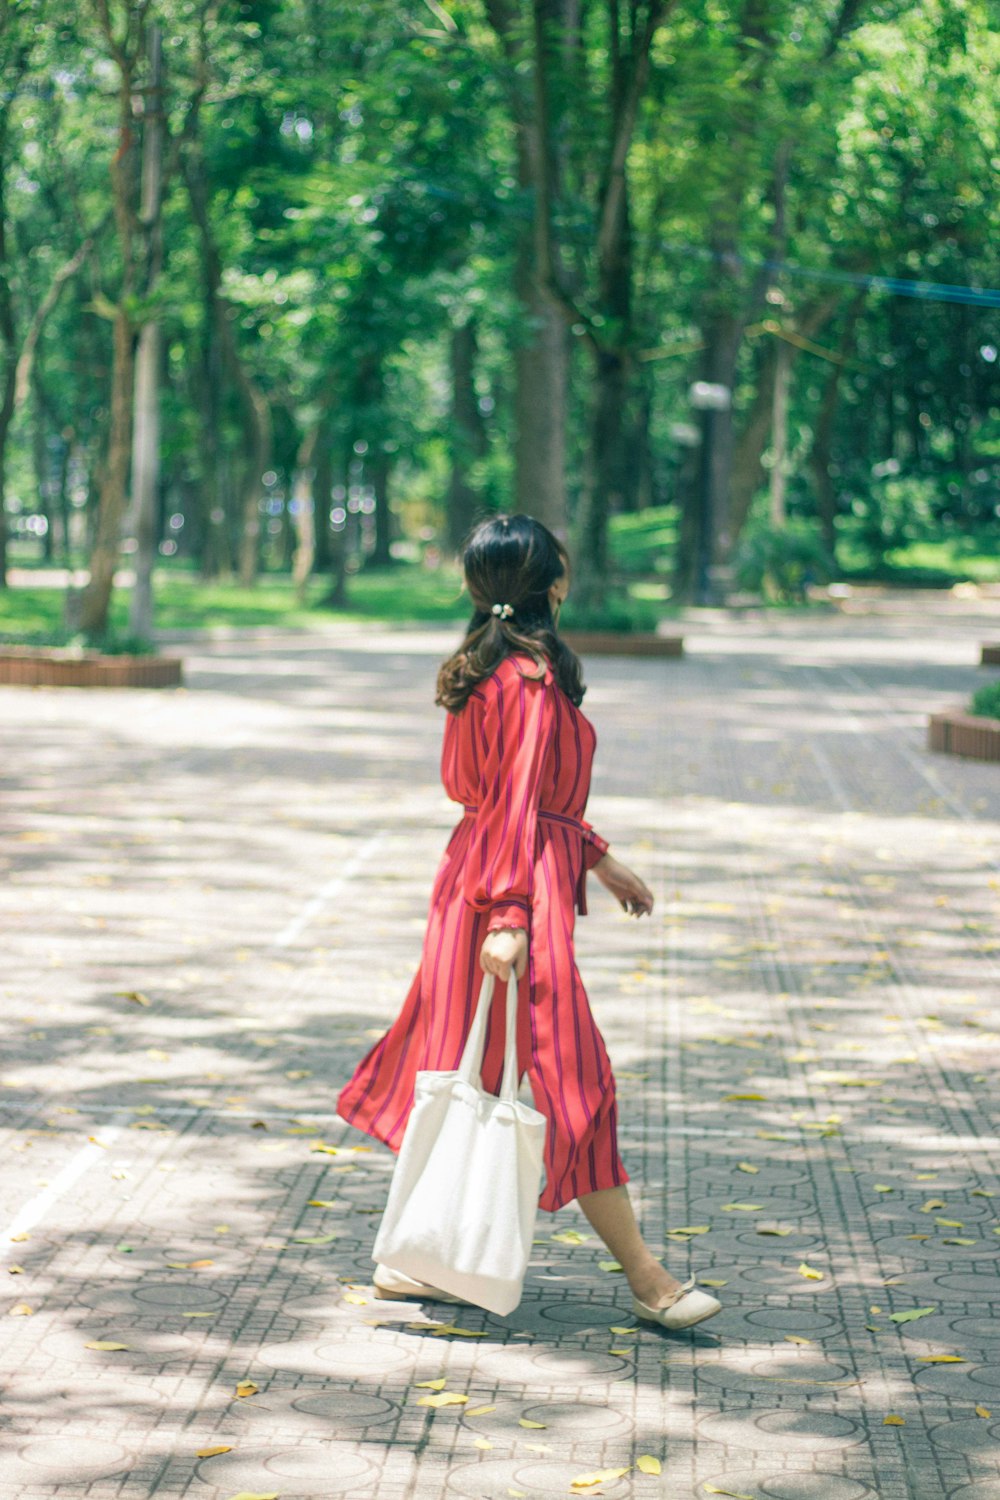 woman in red dress walking on sidewalk during daytime